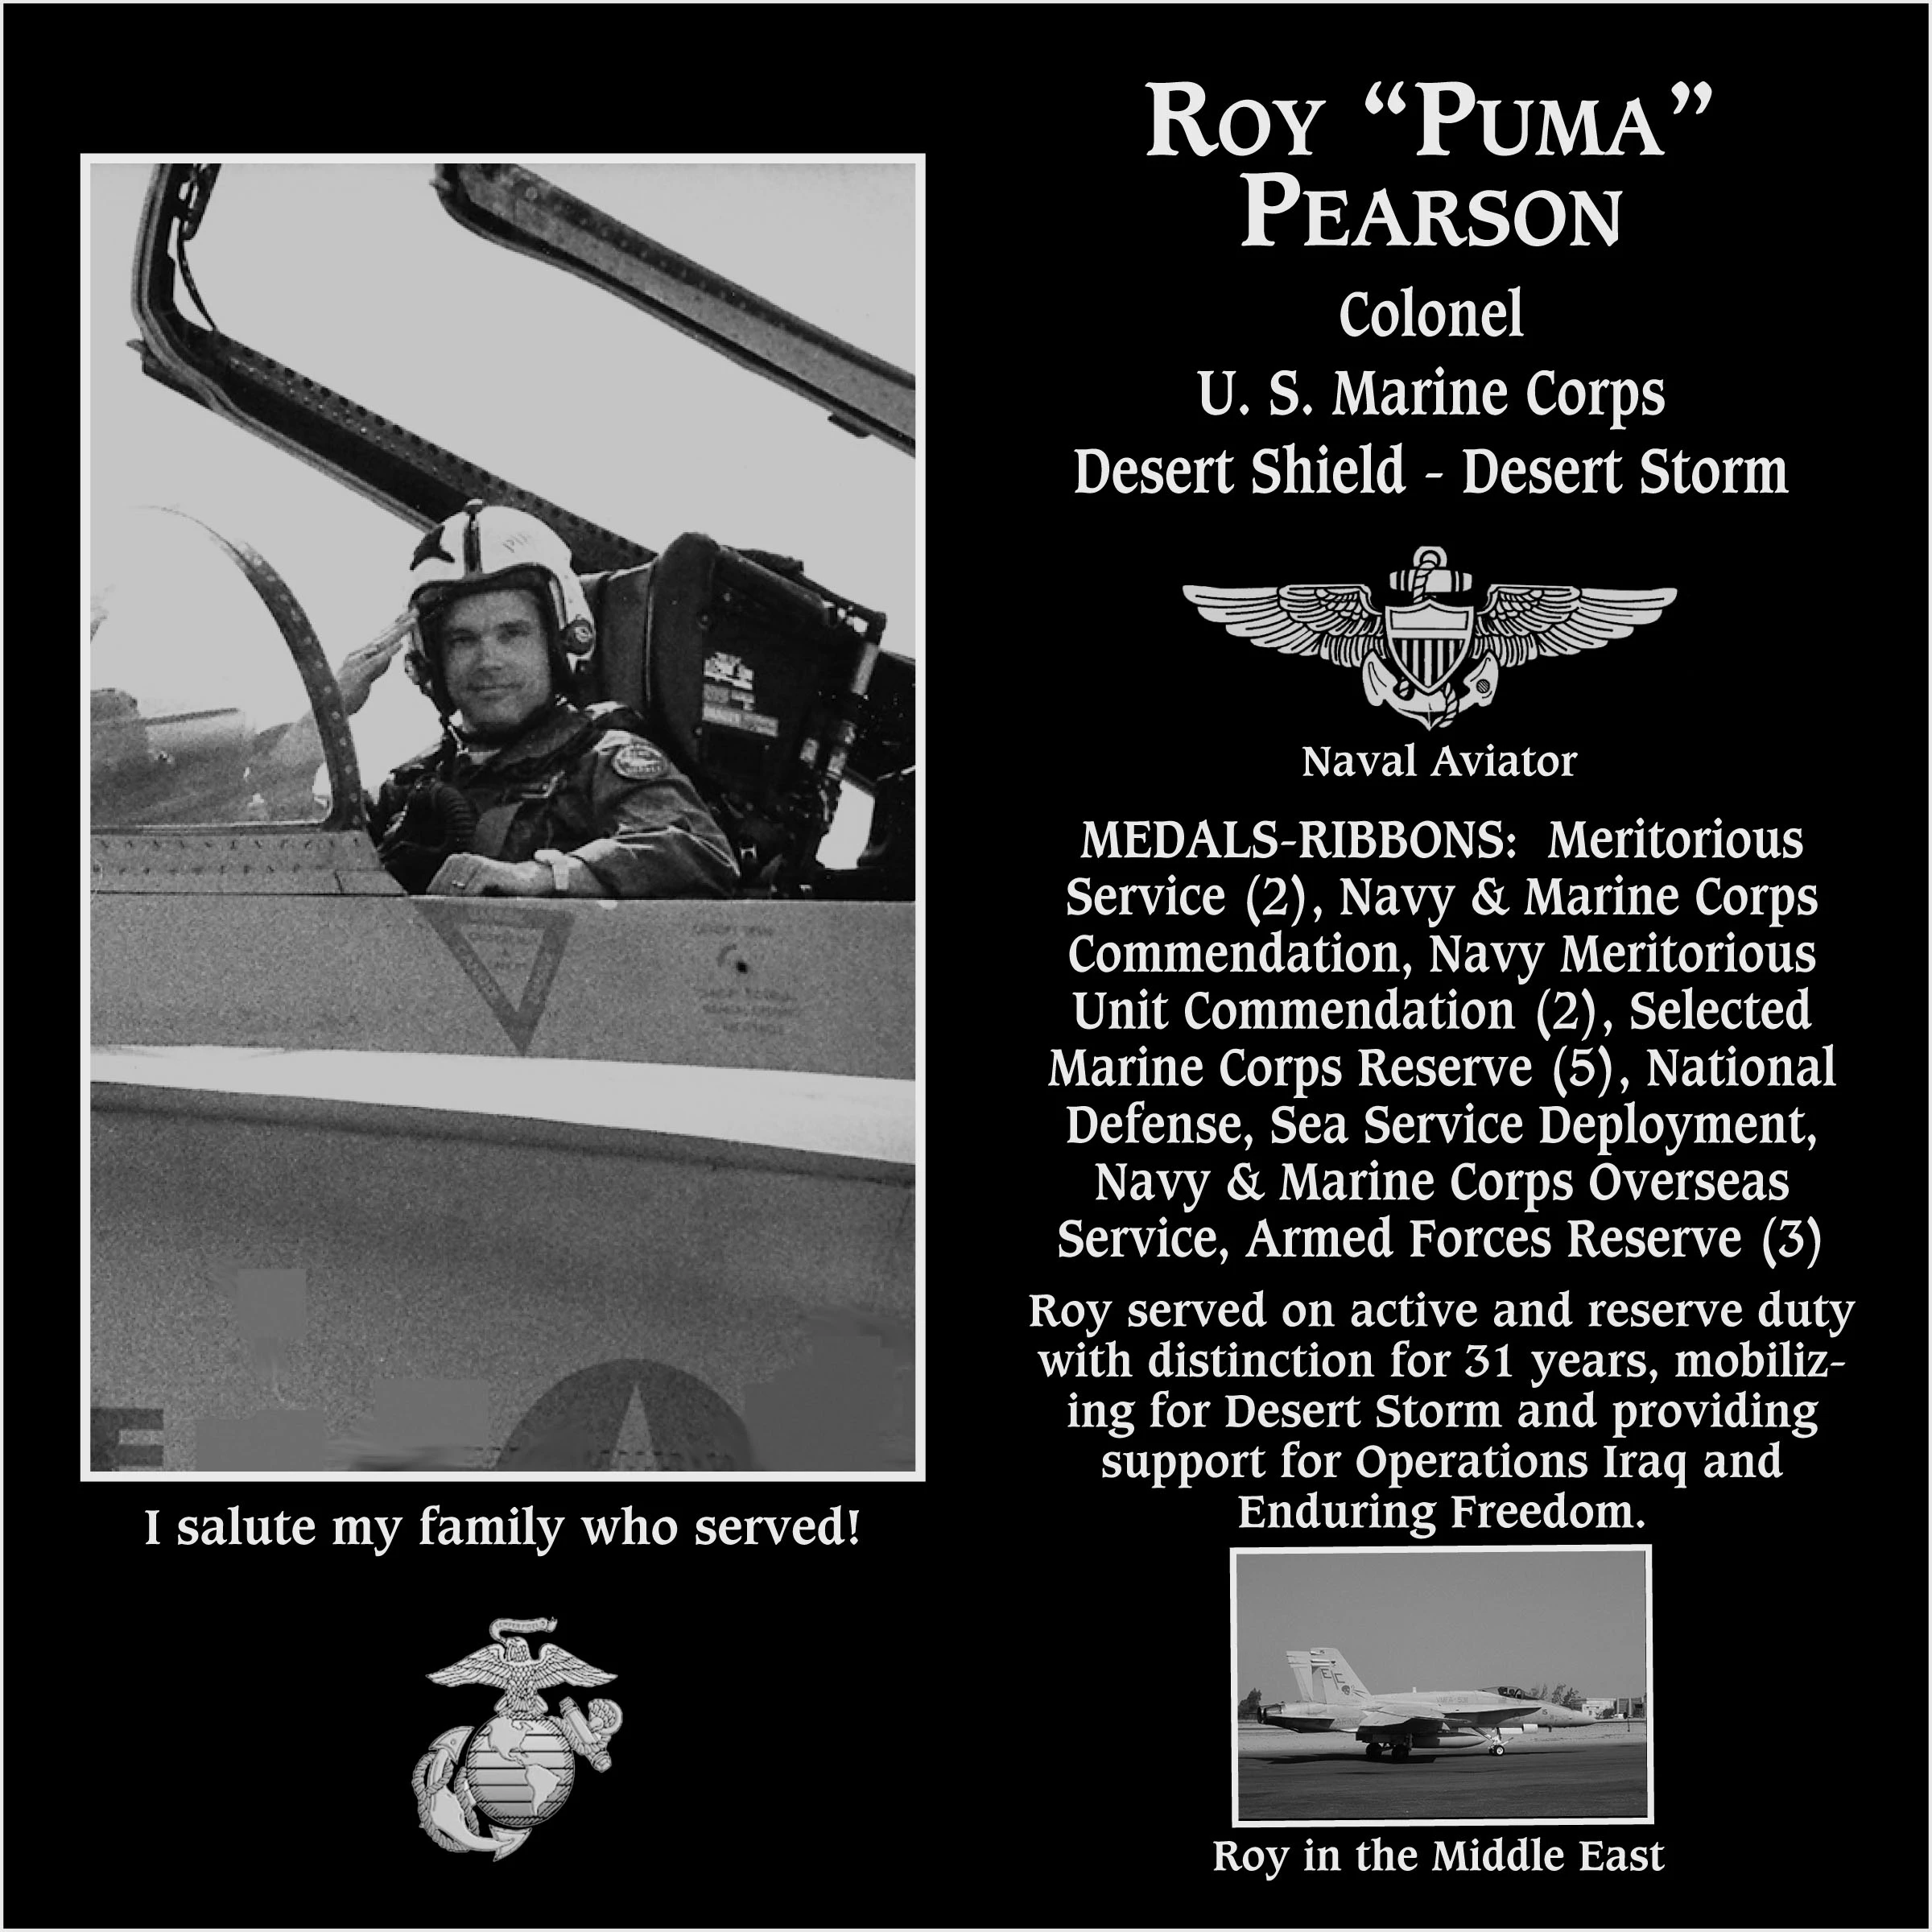 Roy “Puma” Pearson